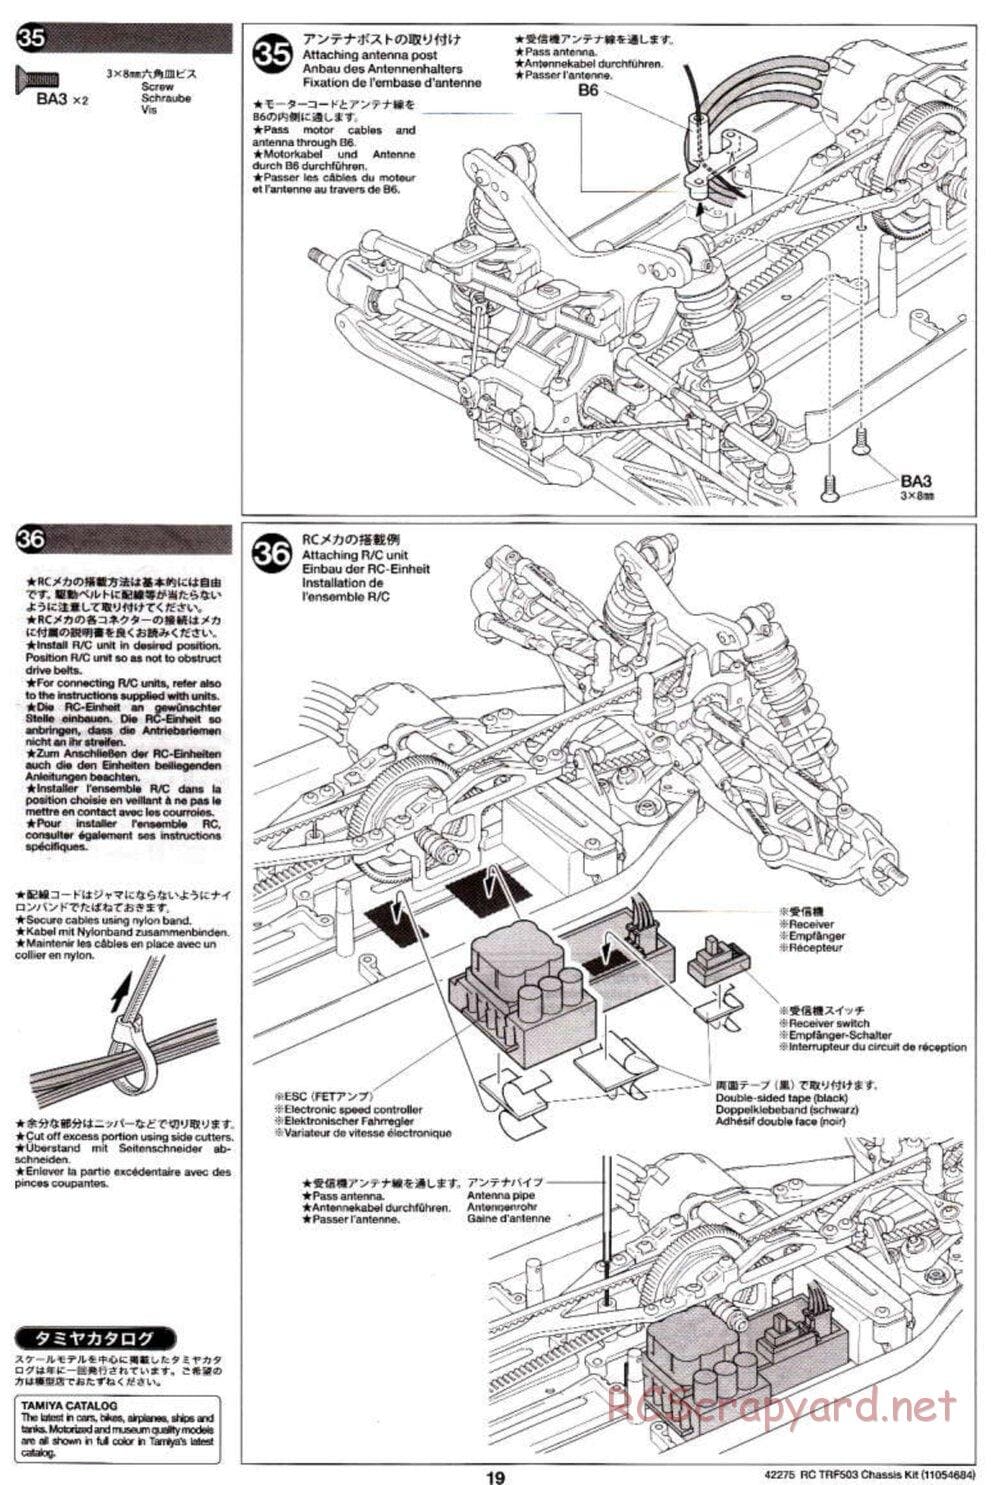 Tamiya - TRF503 Chassis - Manual - Page 19